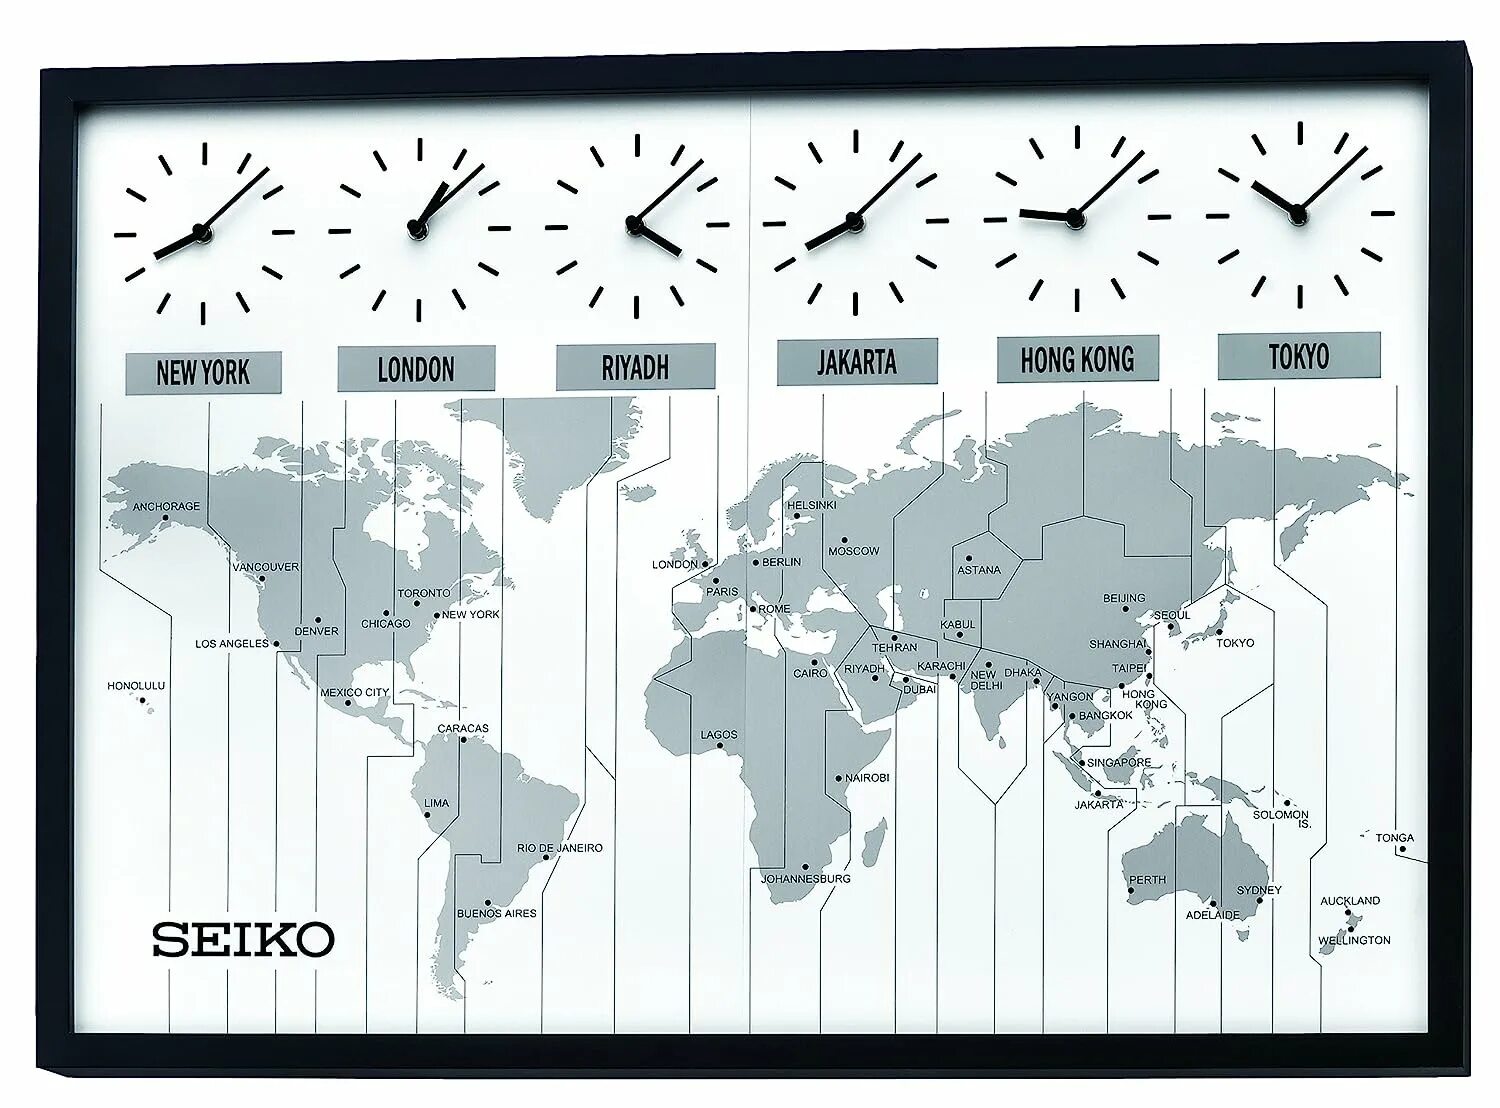 Мировые часы. Мировые часы настенные. Часы мировые пояса. Часы настенные мировое время.